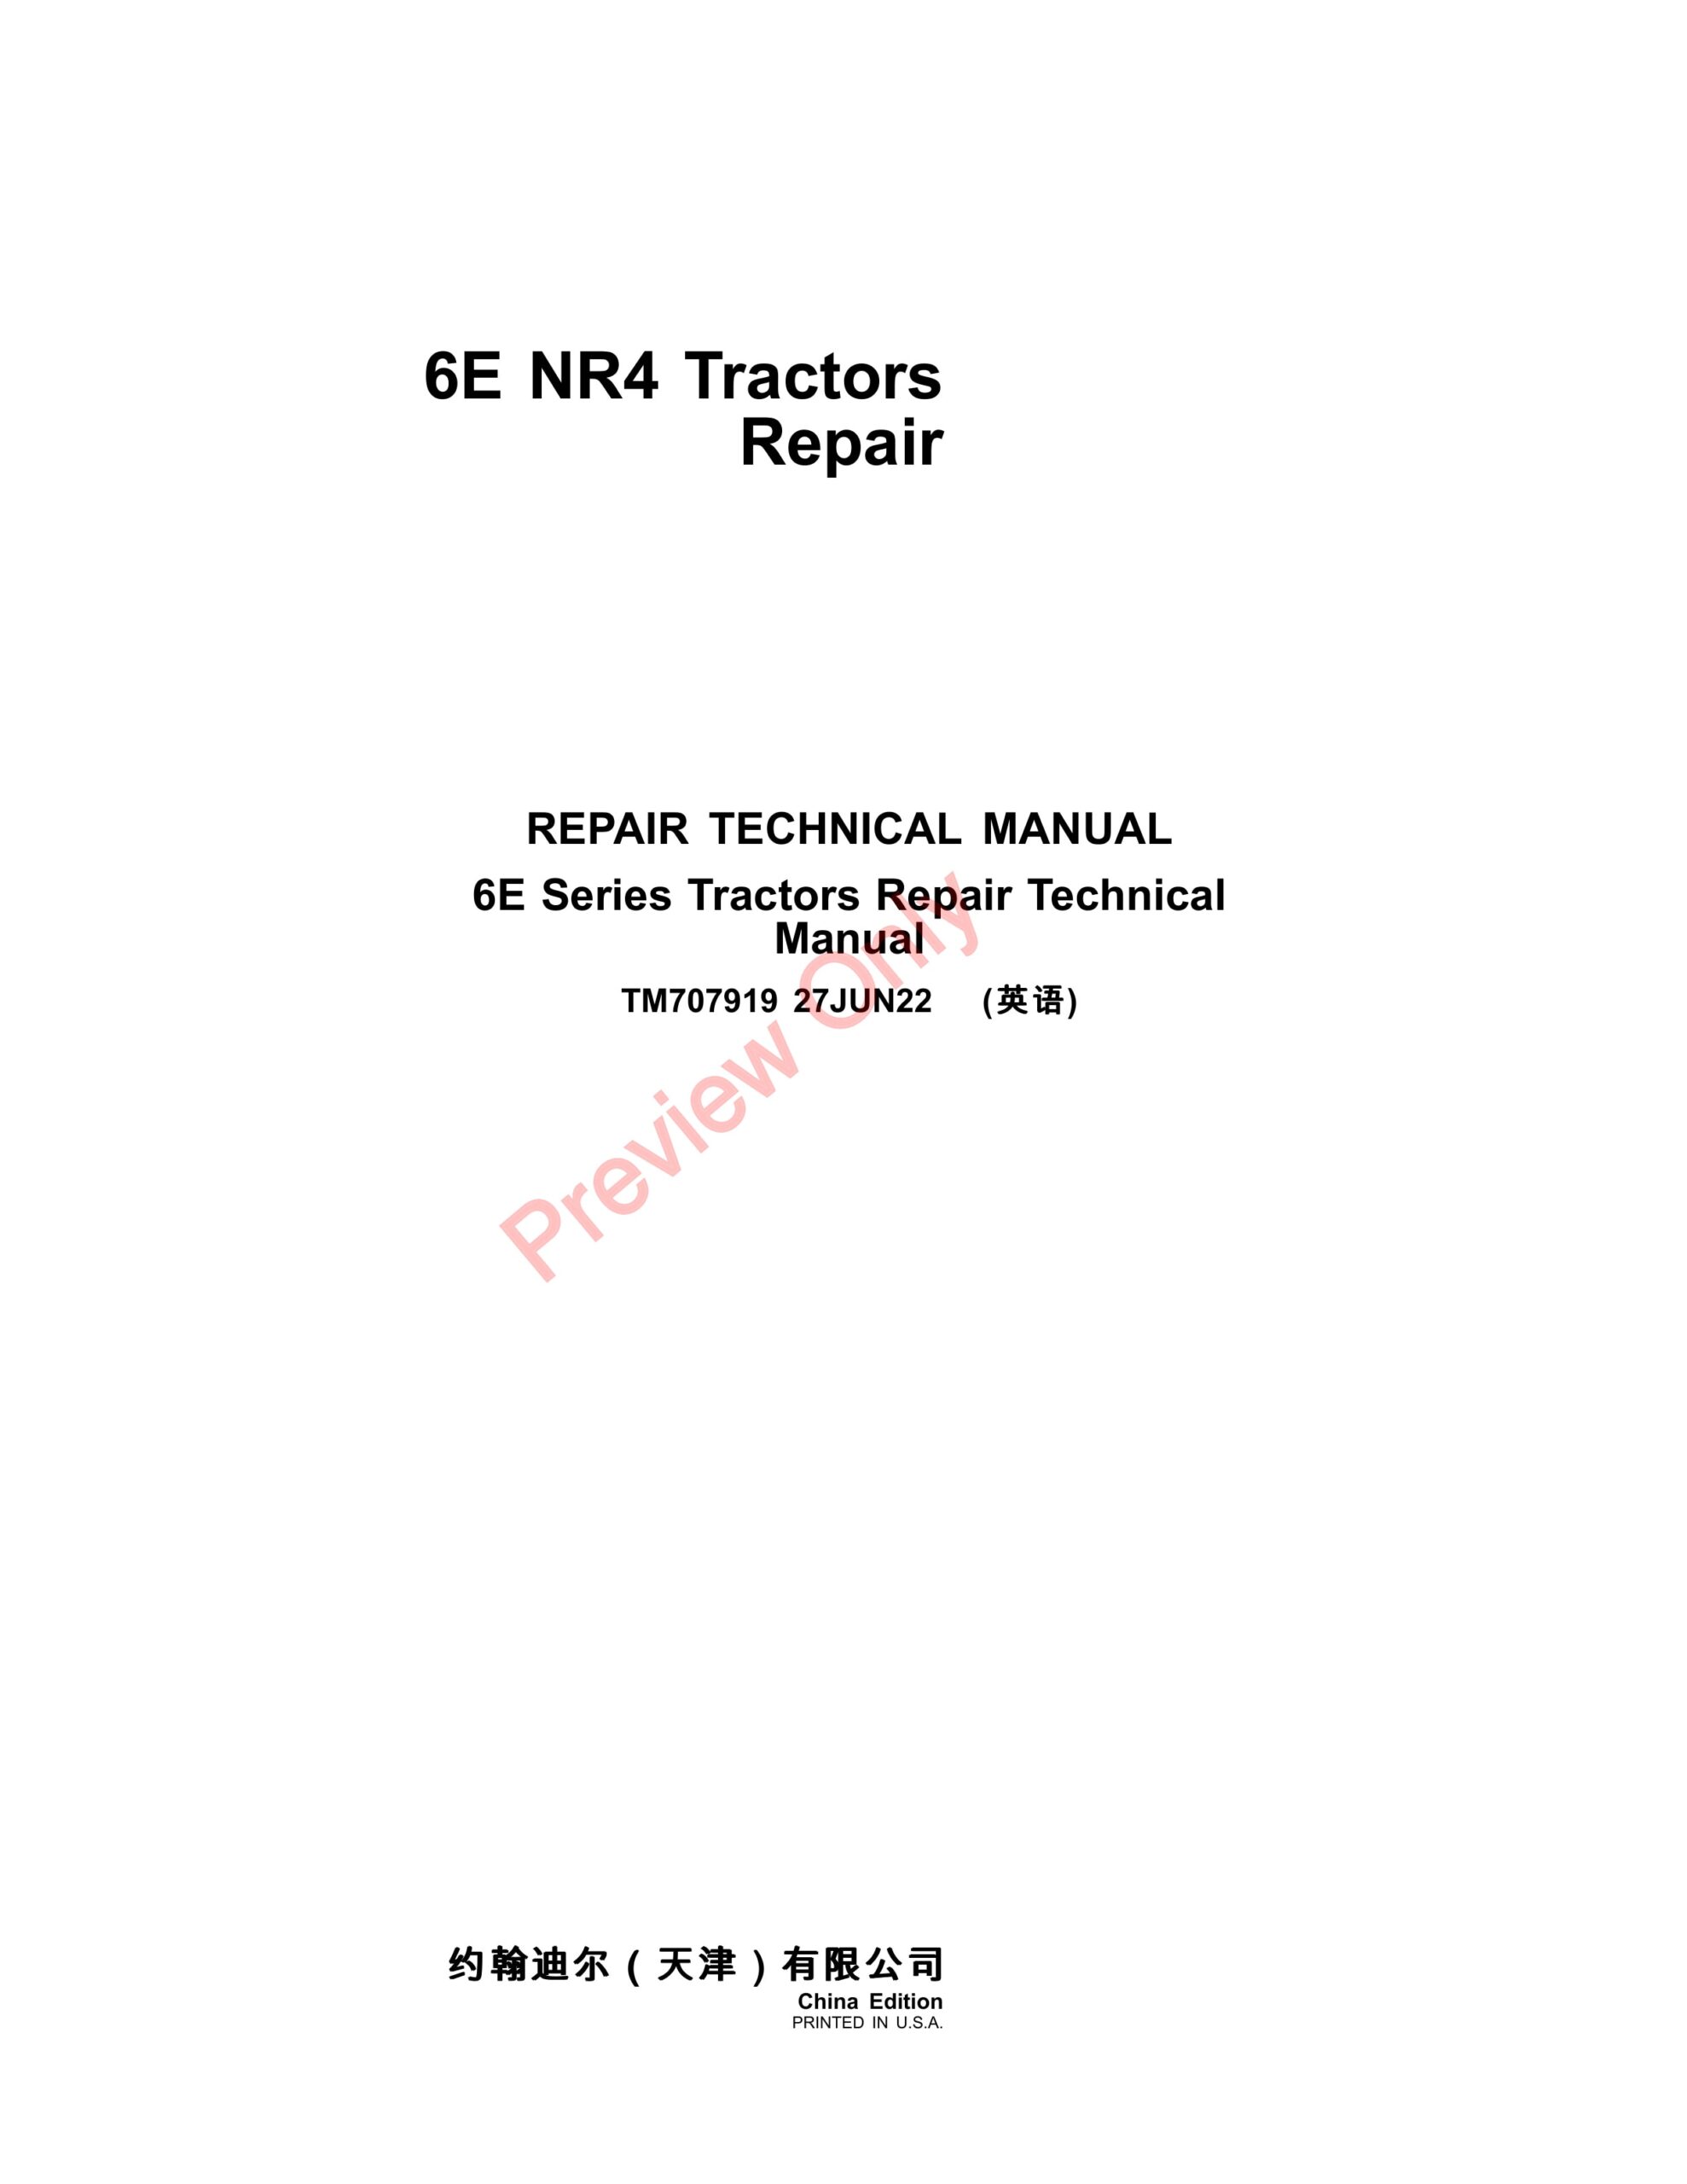 John Deere 6E NR4 Tractors Repair Technical Manual TM707919 27JUN22-1